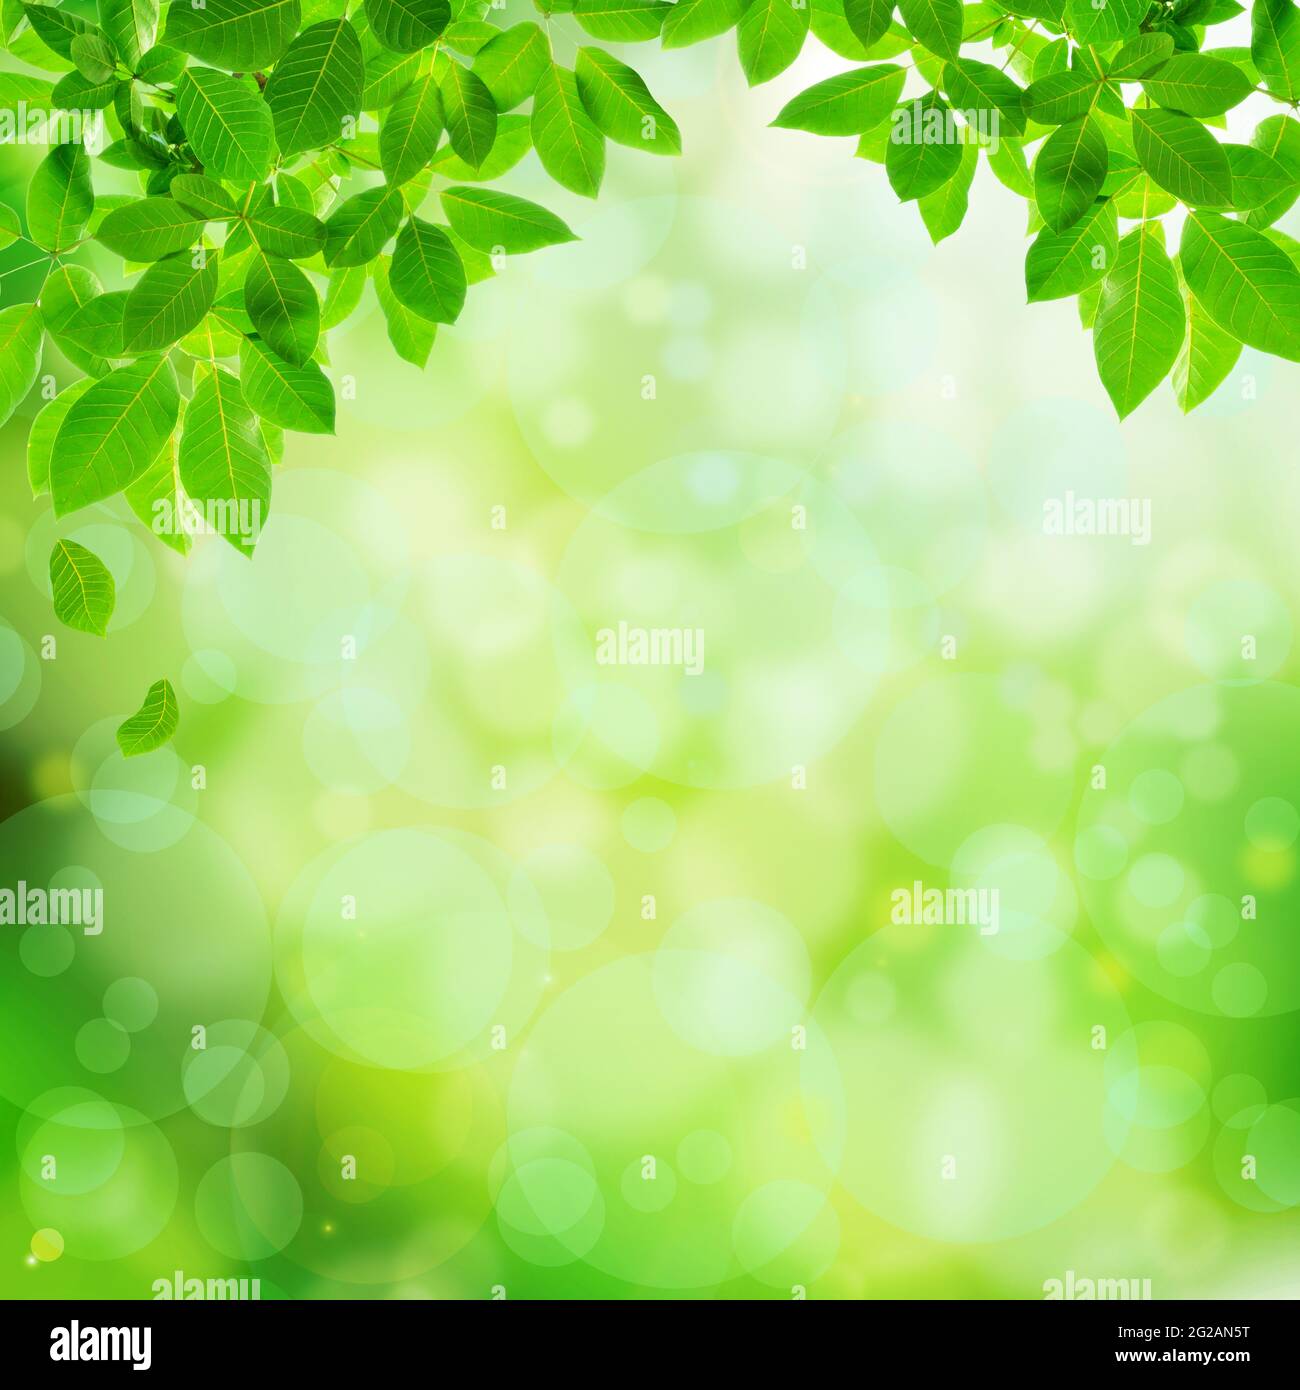 Grüne Blätter auf Bokeh abstrakten Hintergrund - Bordüre Design Stockfoto